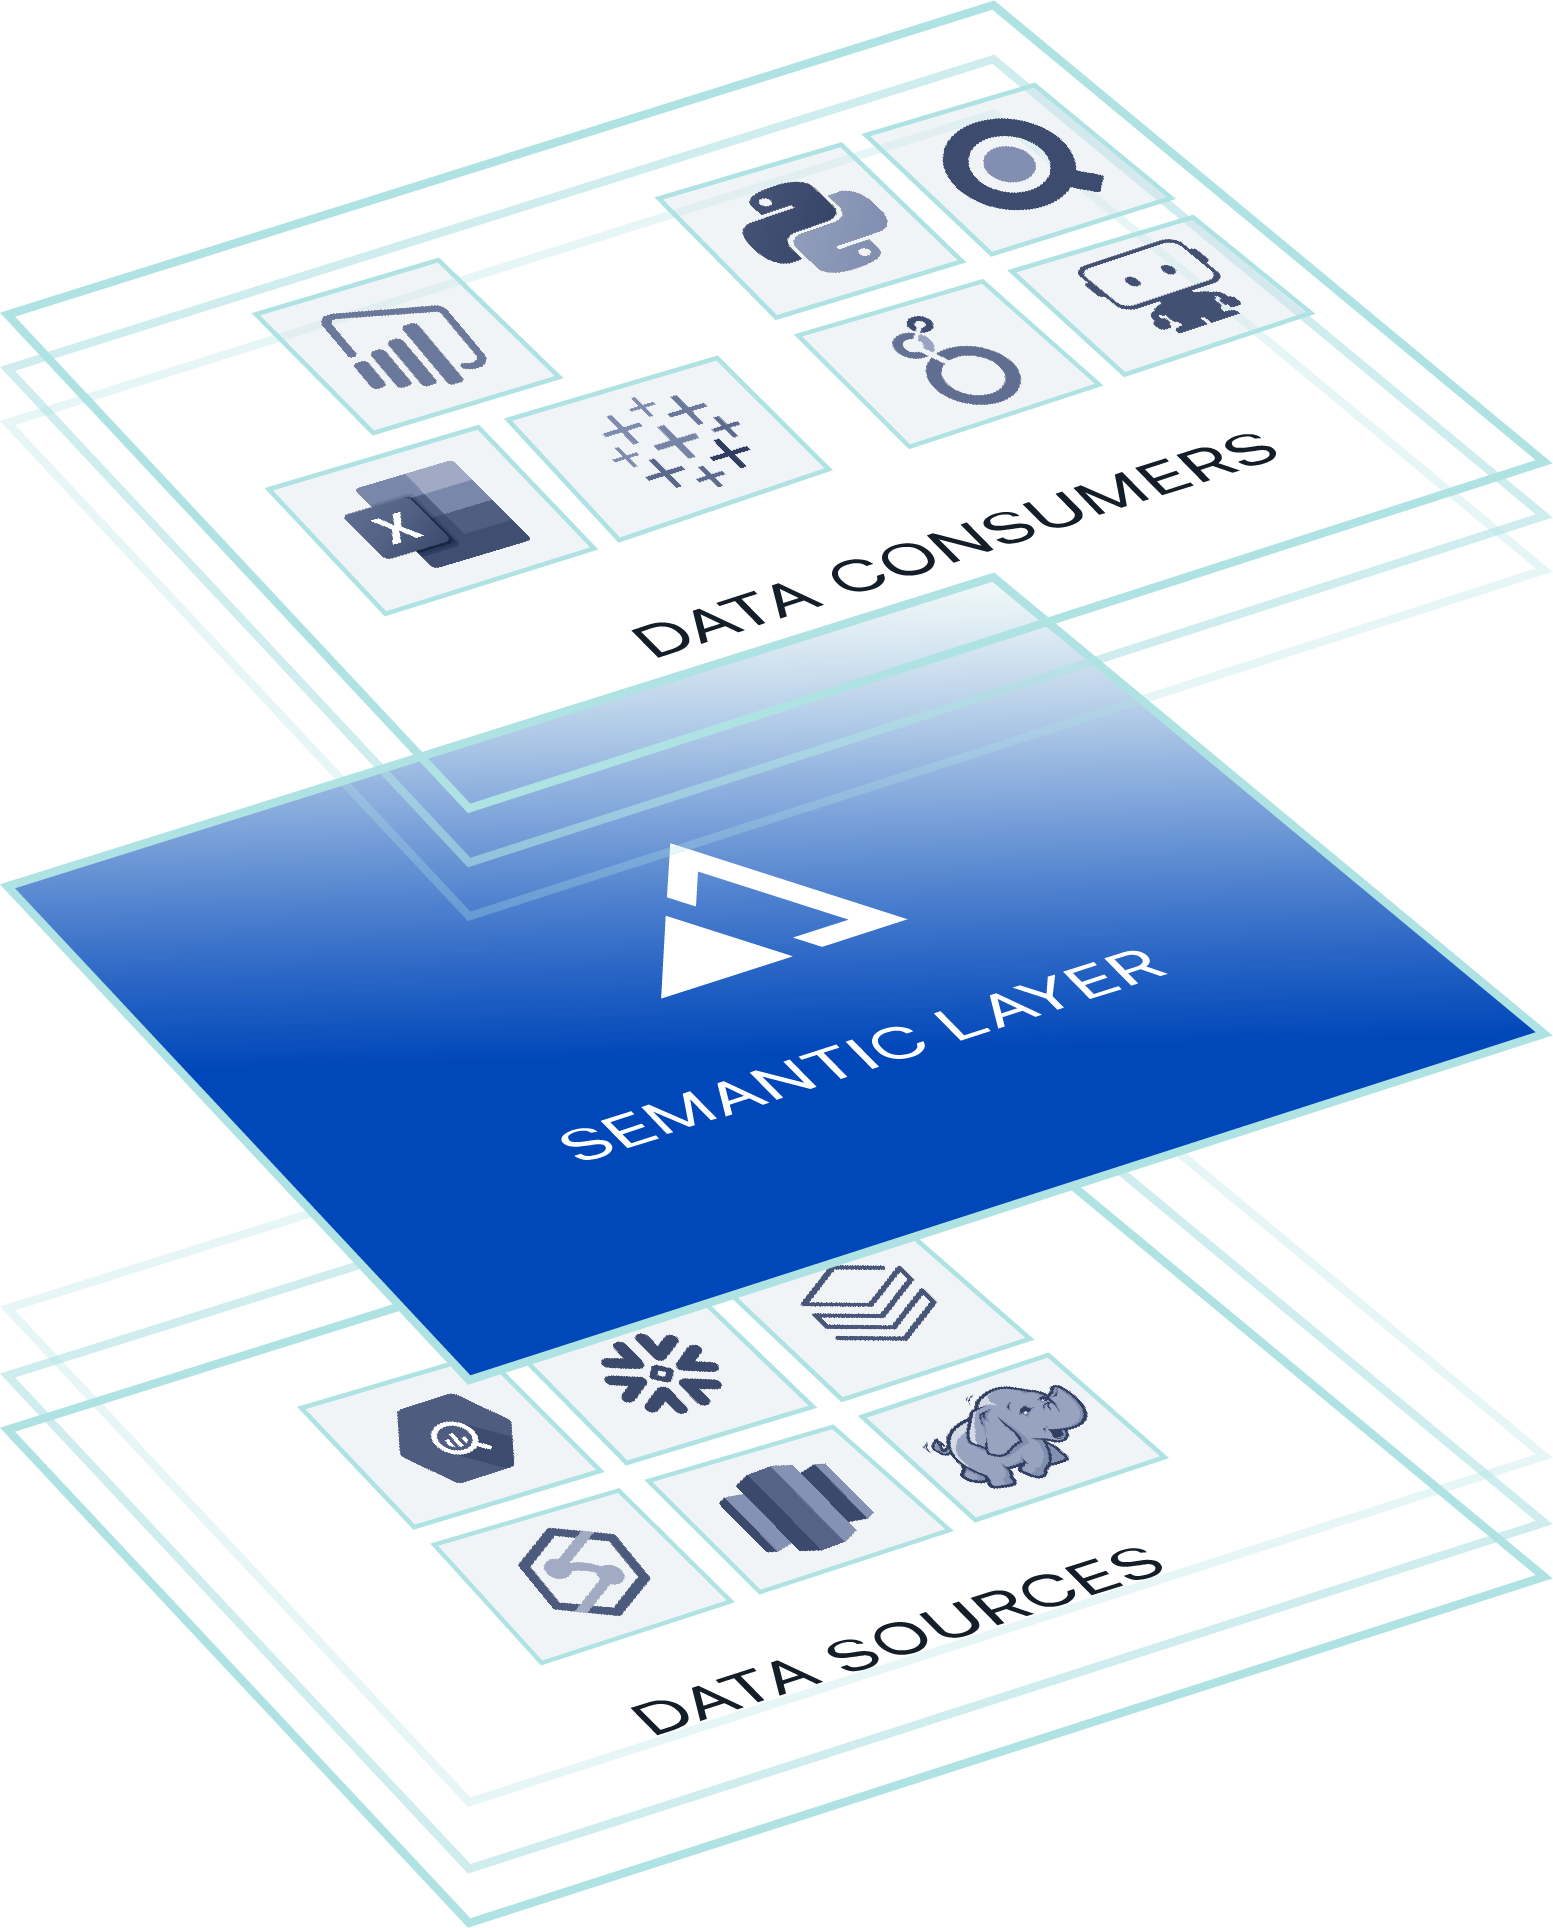 AtScale semantic layer